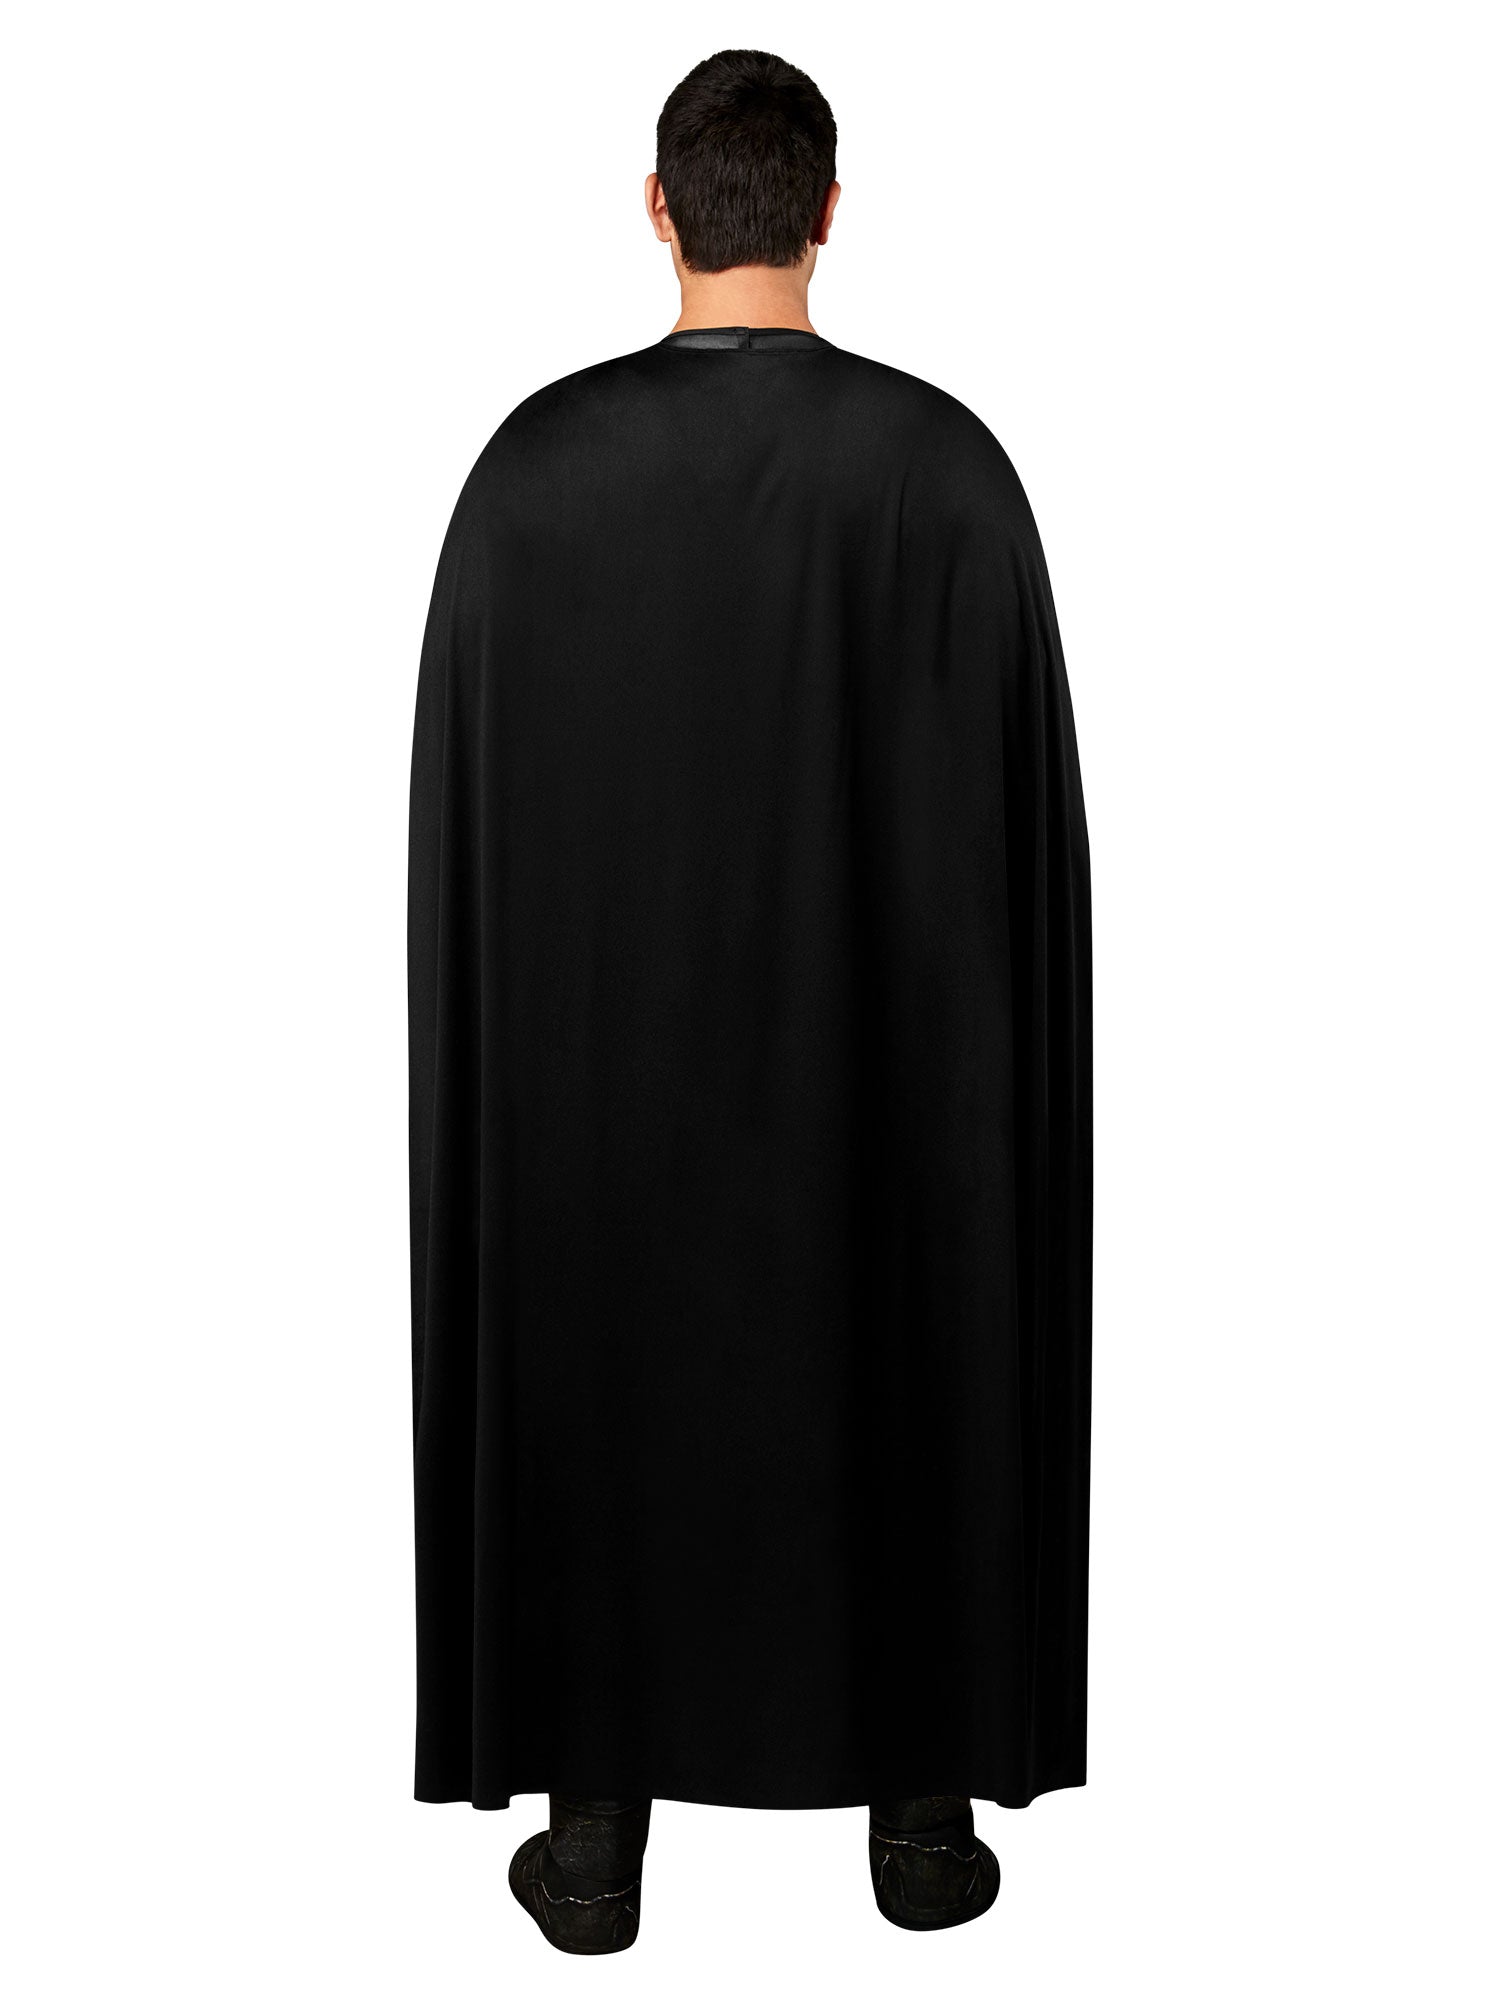 Black Adam, Black, DC, Adult Costume, L, Side